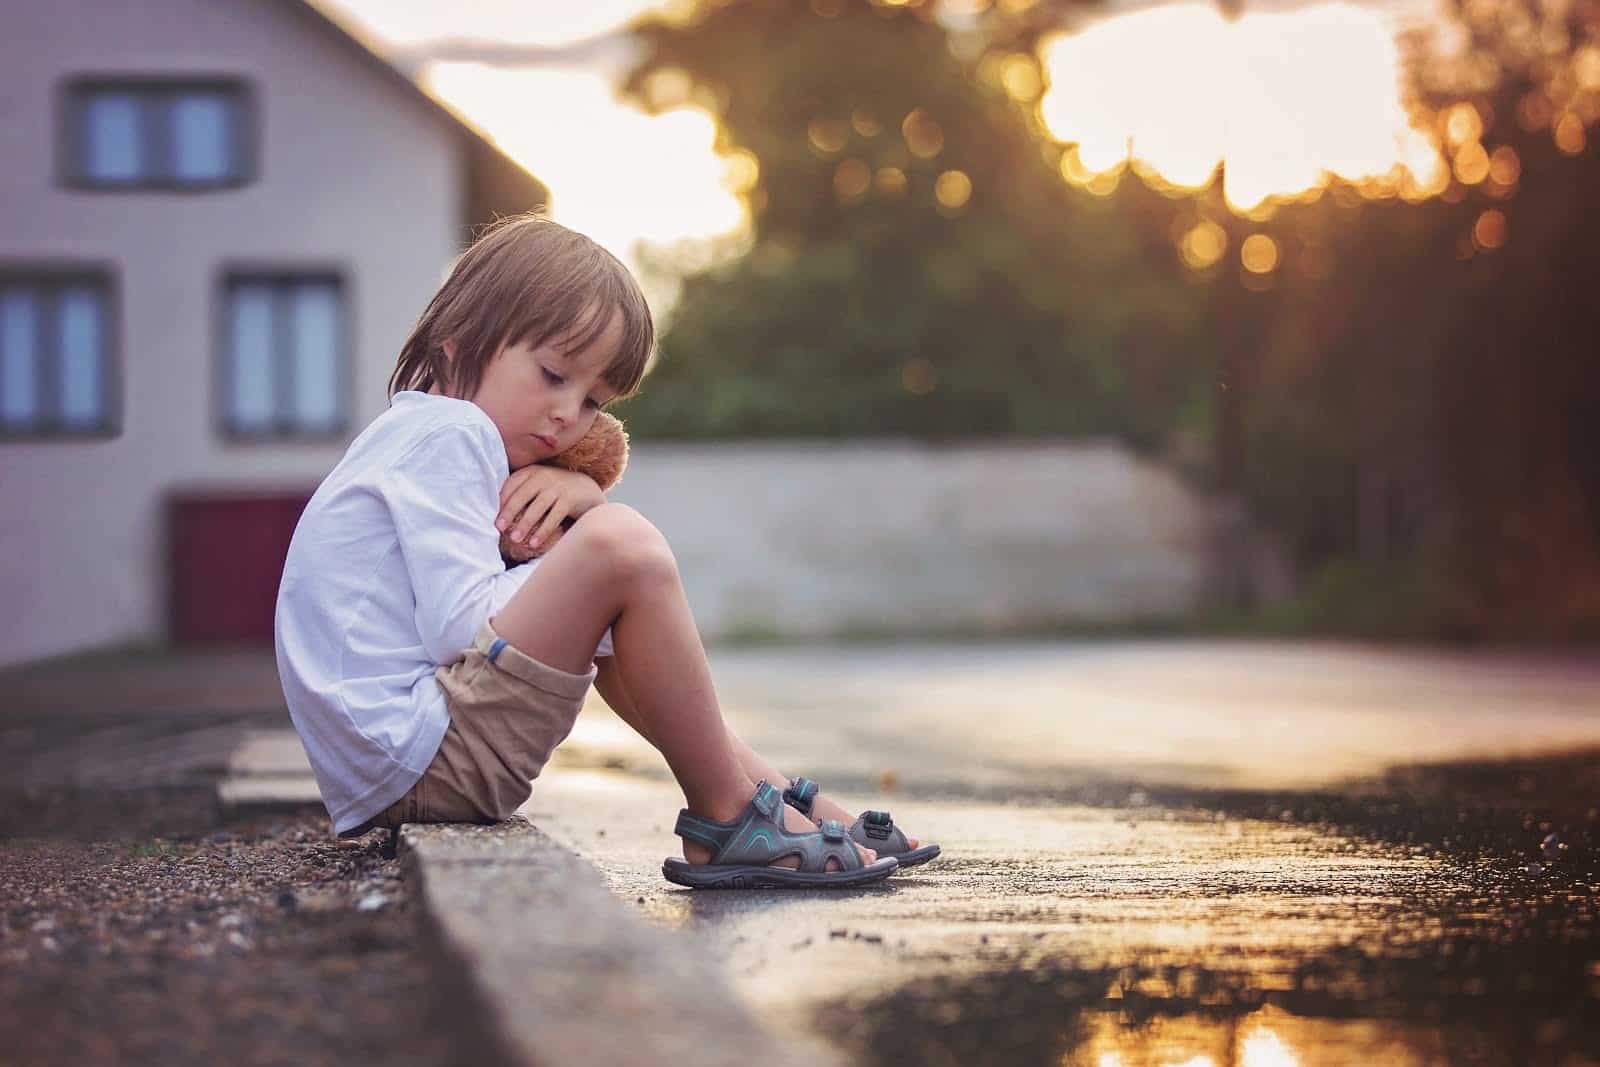 Sad little boy, sitting on the street in the rain, hugging his teddy bear, summertime on sunset